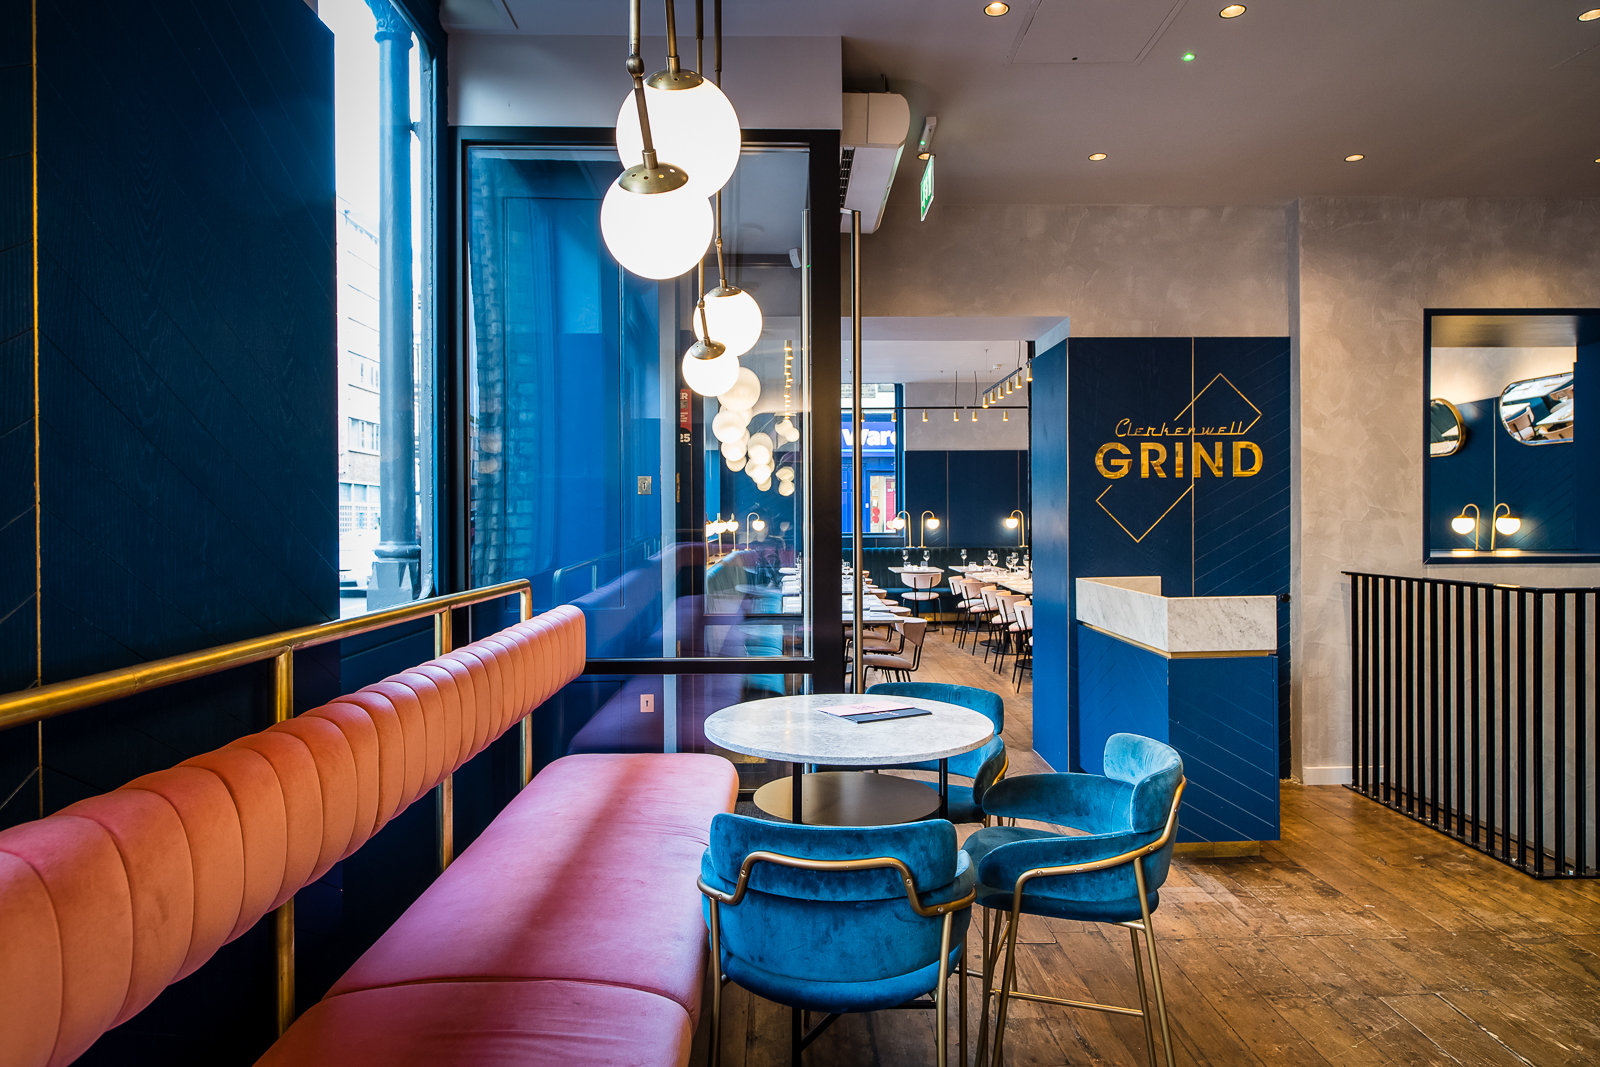 Clerkenwell Grind- Where Restaurant Interior Design Meets Inspiration